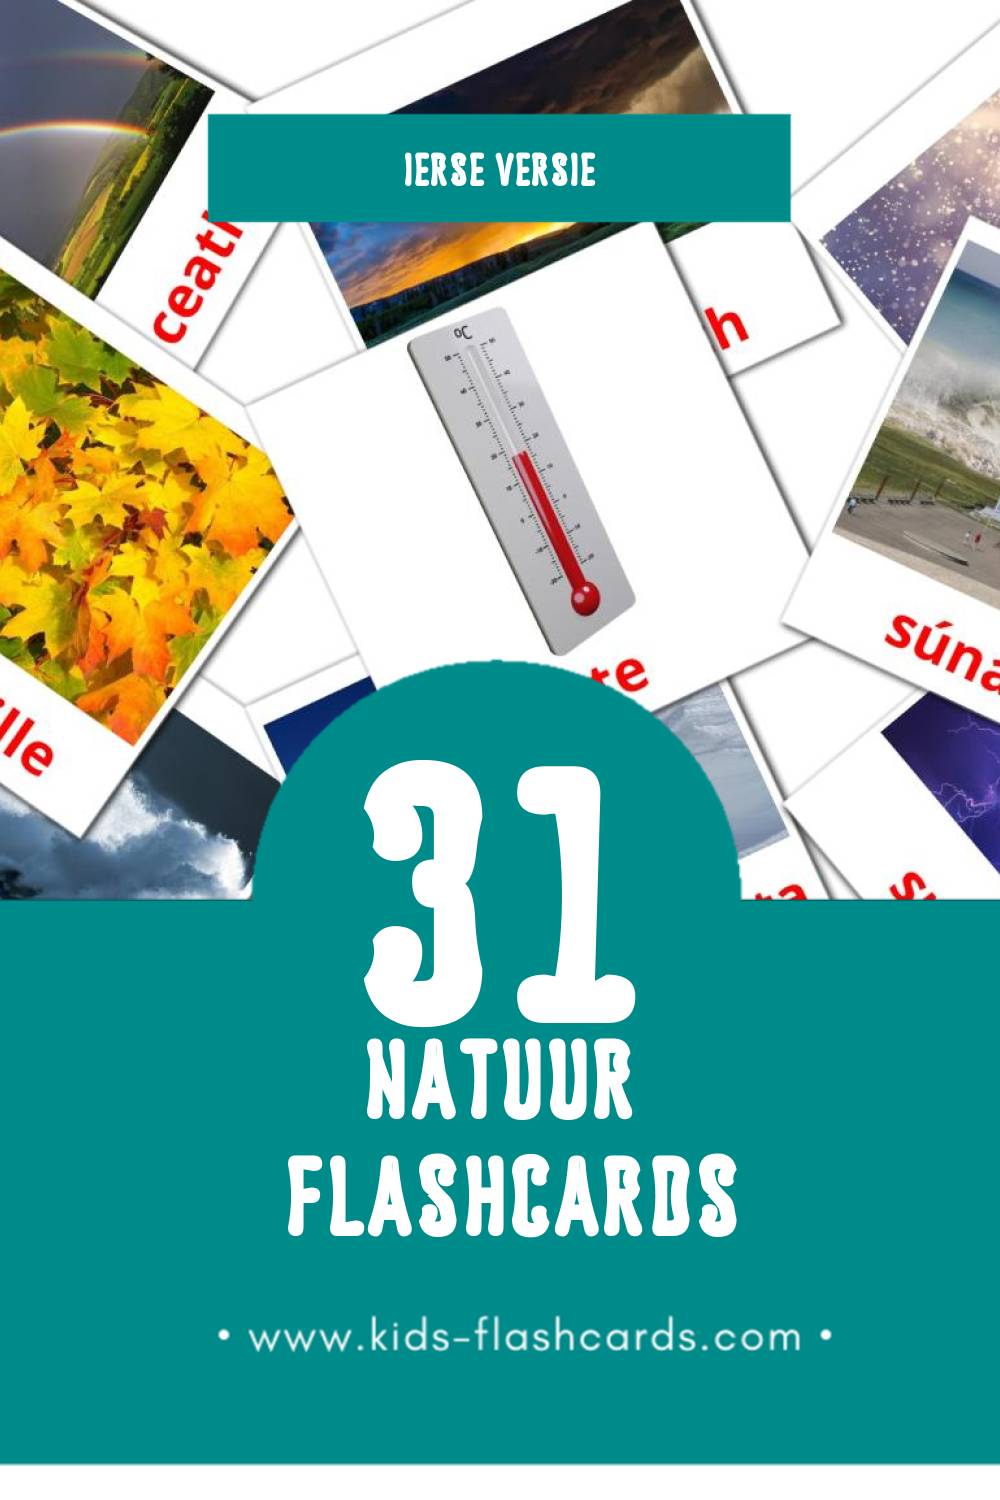 Visuele Nádúr Flashcards voor Kleuters (31 kaarten in het Iers)